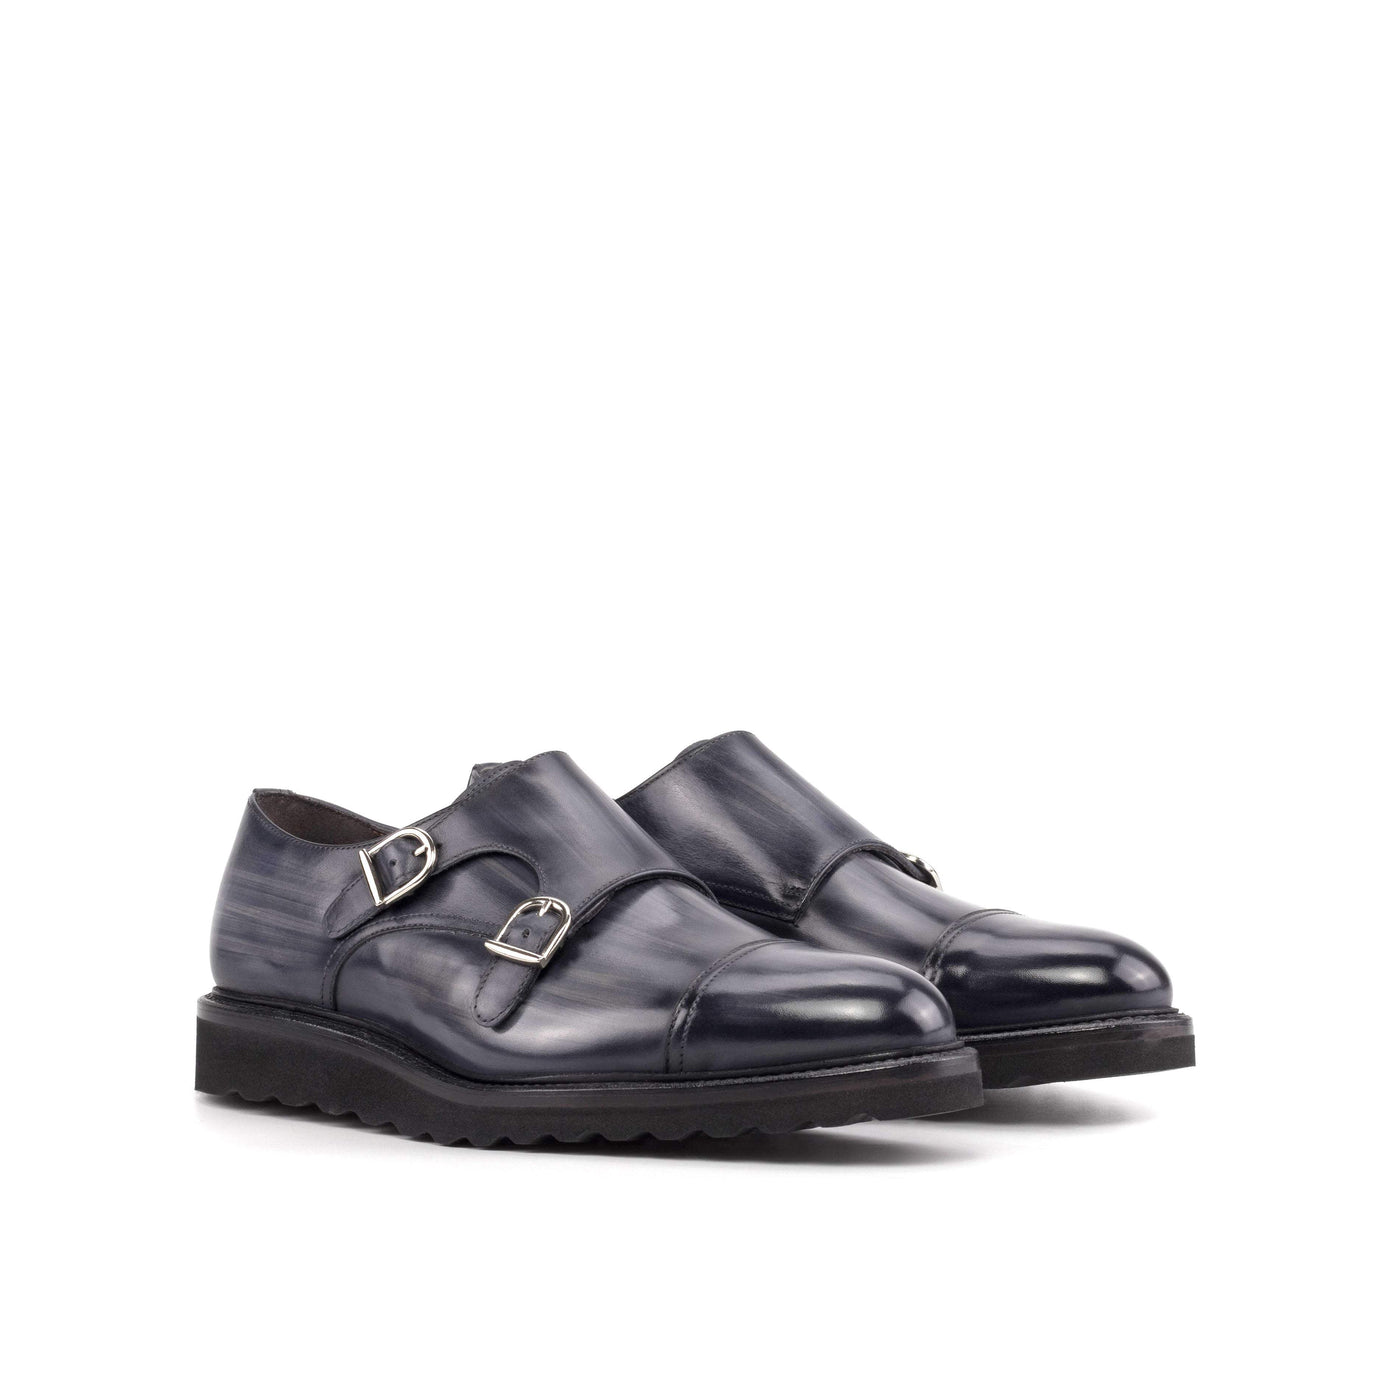 Men's Double Monk Shoes Patina Goodyear Welt Grey 5579 6- MERRIMIUM